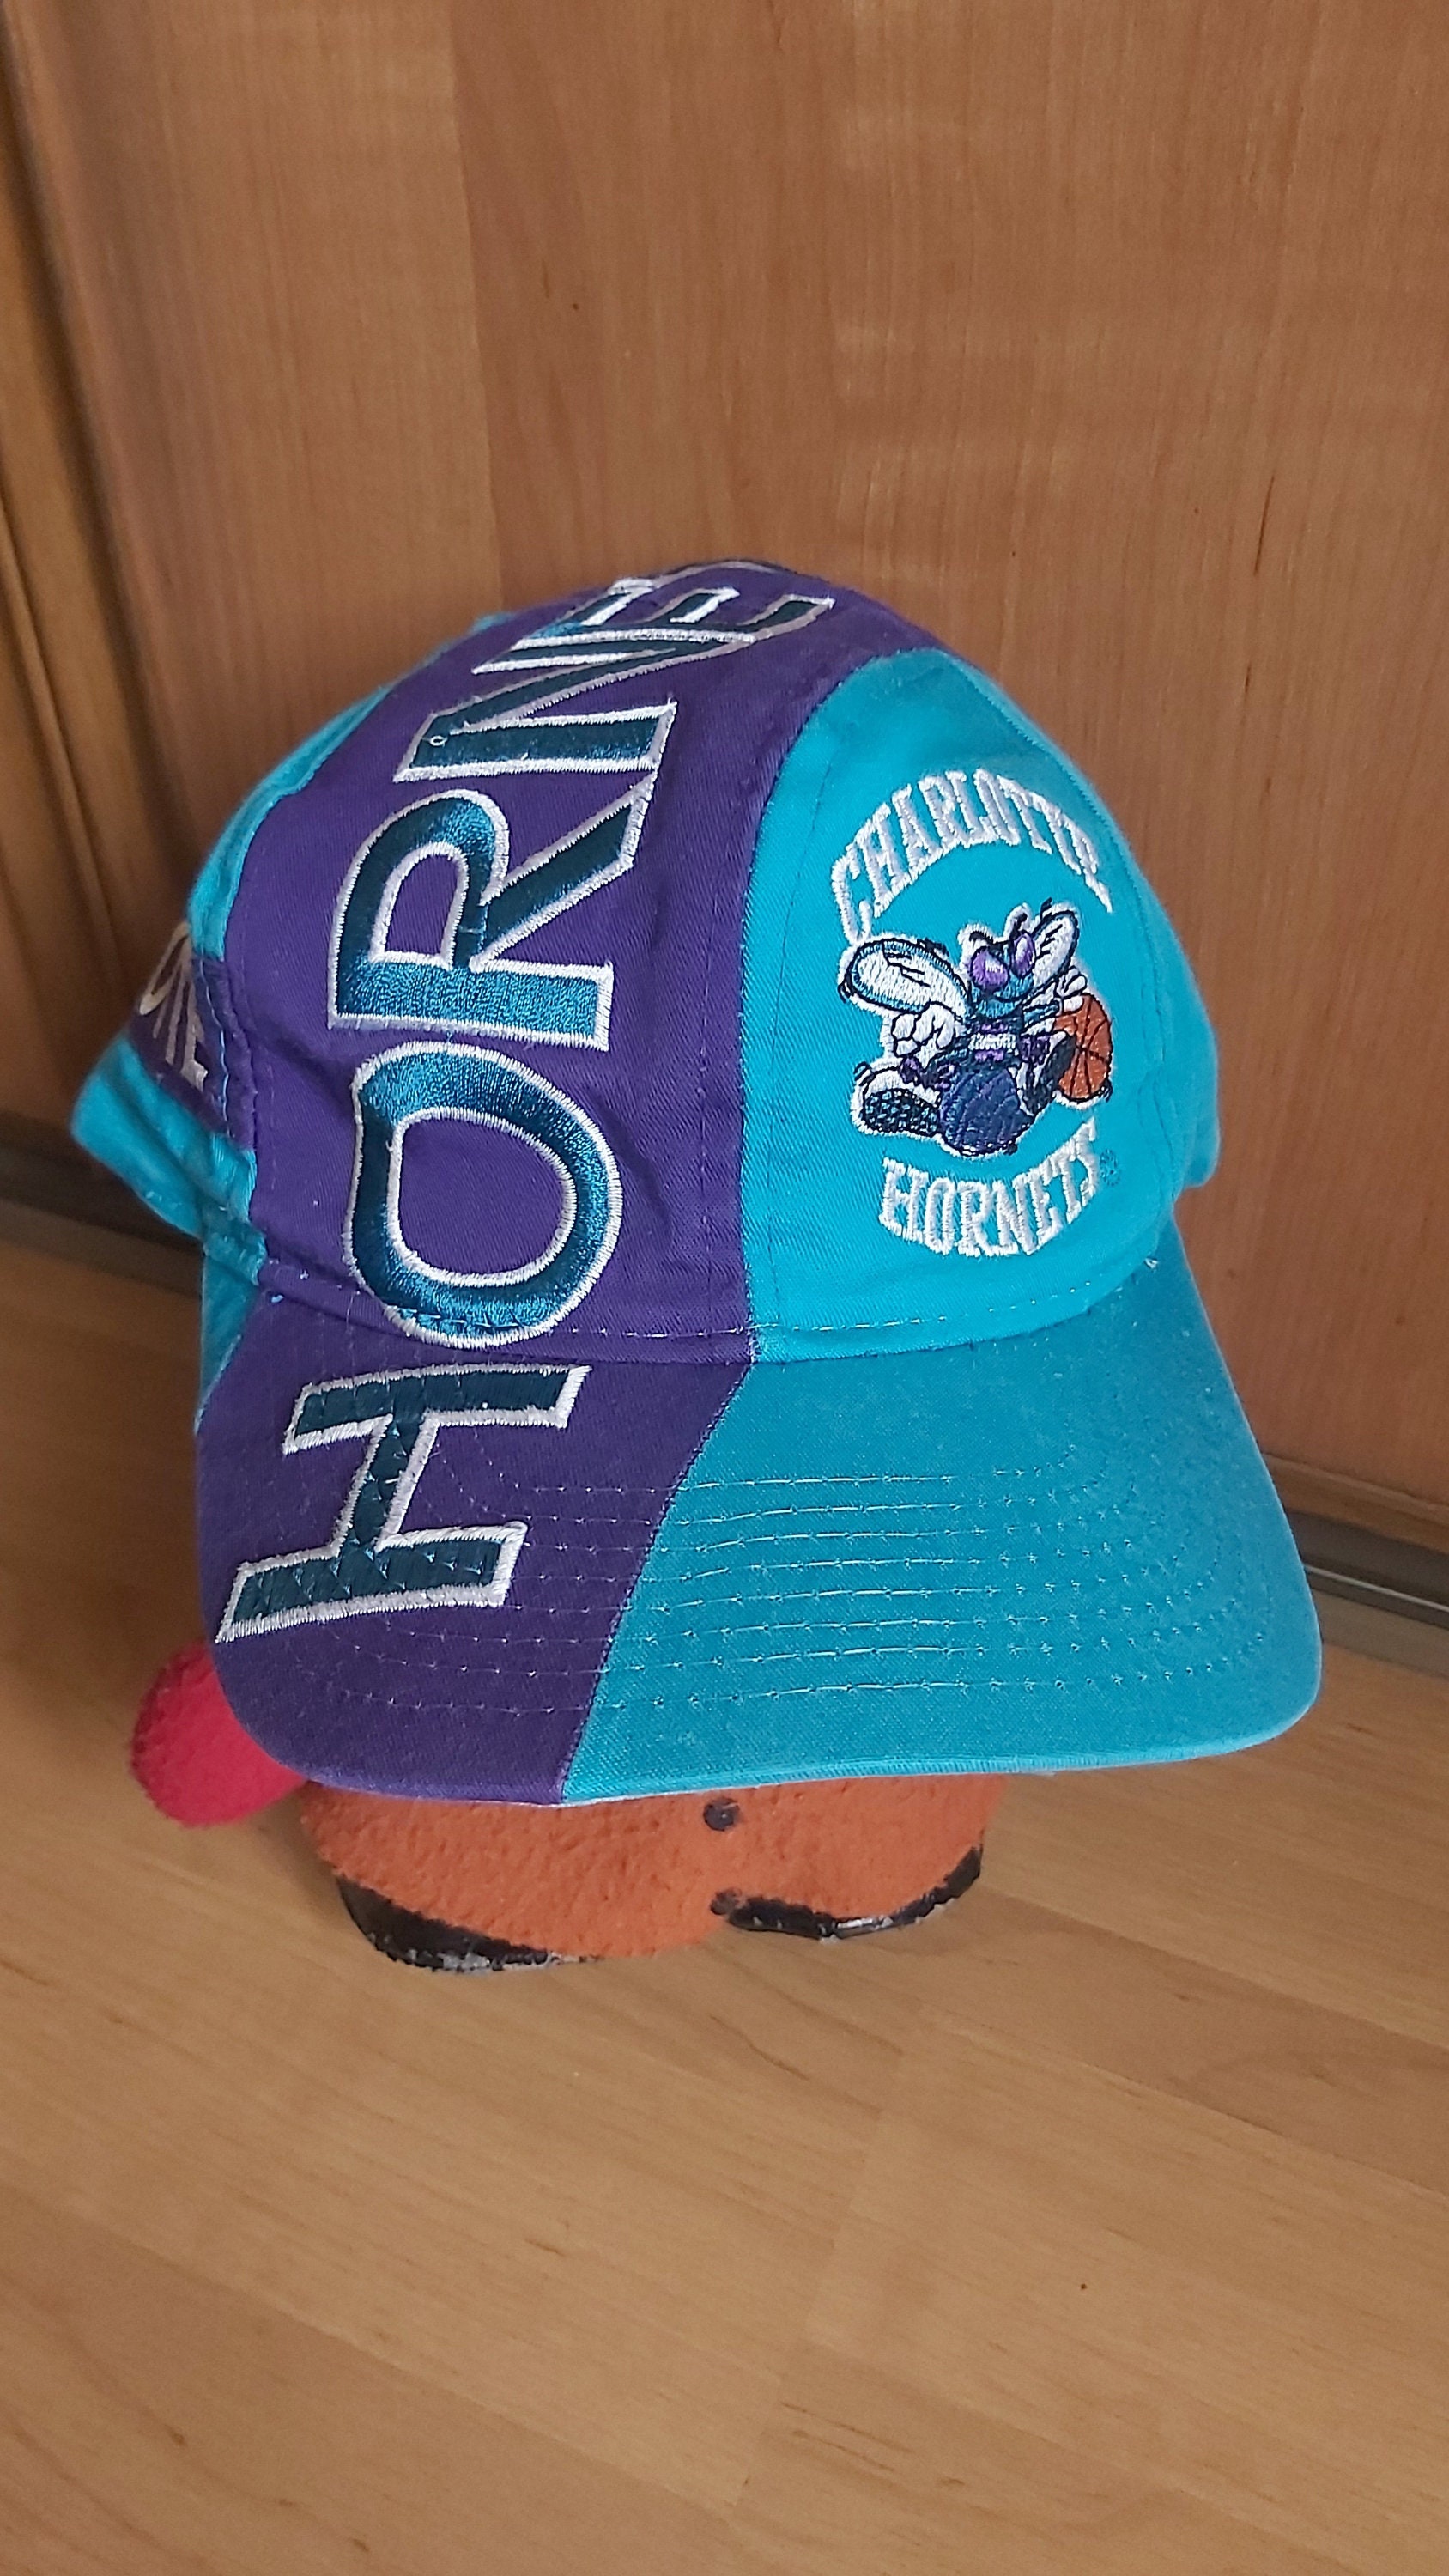 Mitchell & Ness Mens NBA Charlotte Hornets Vintage Jockey HWC Snapback Hat  HHSS1209-CHOYYPPPCREA Cream